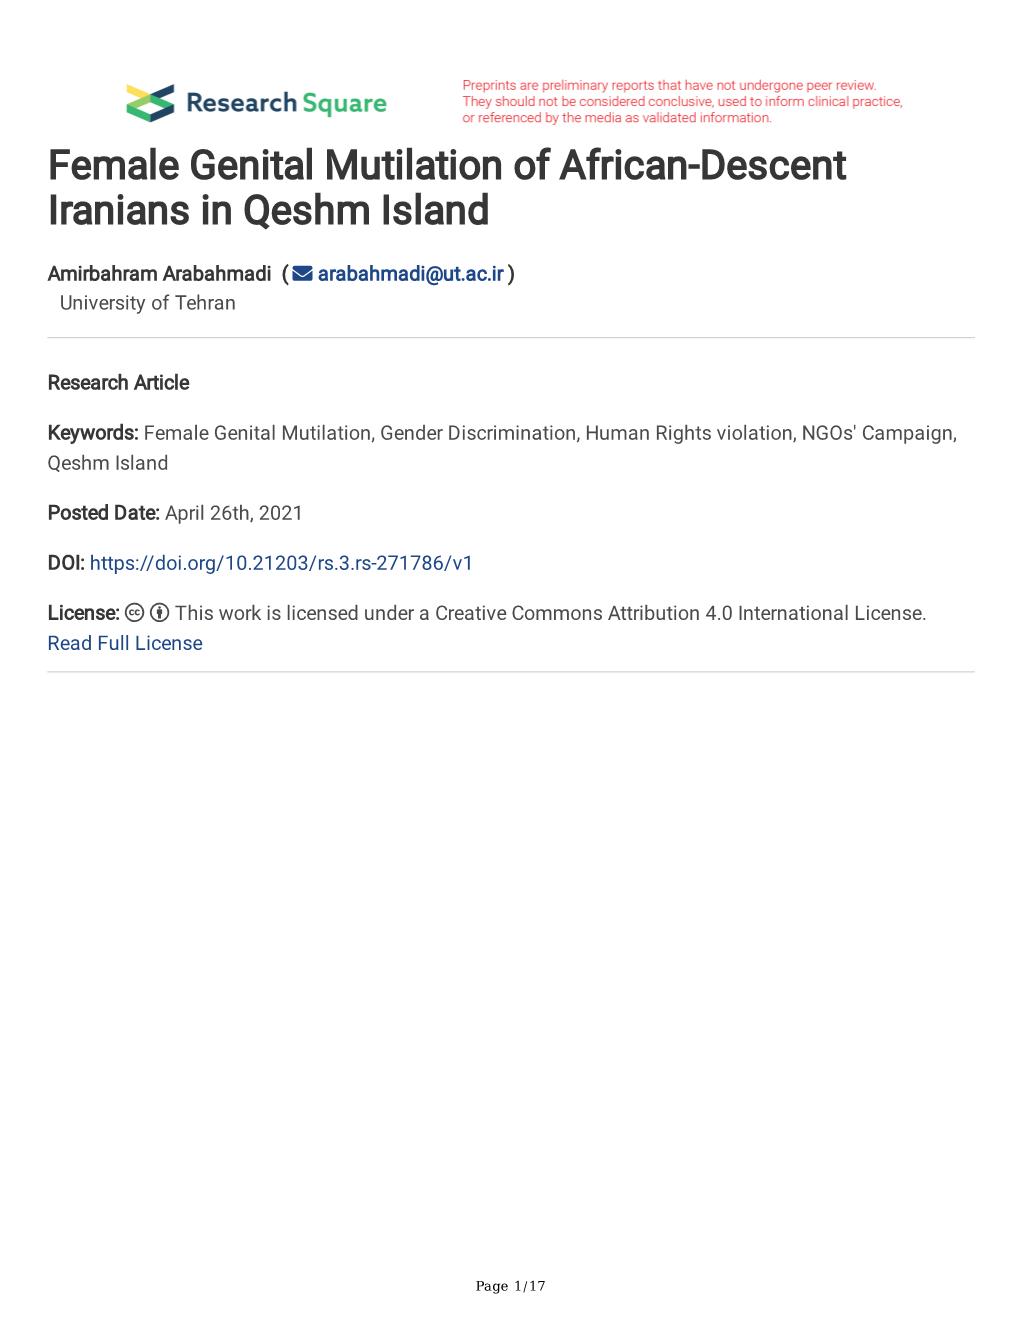 Female Genital Mutilation of African-Descent Iranians in Qeshm Island